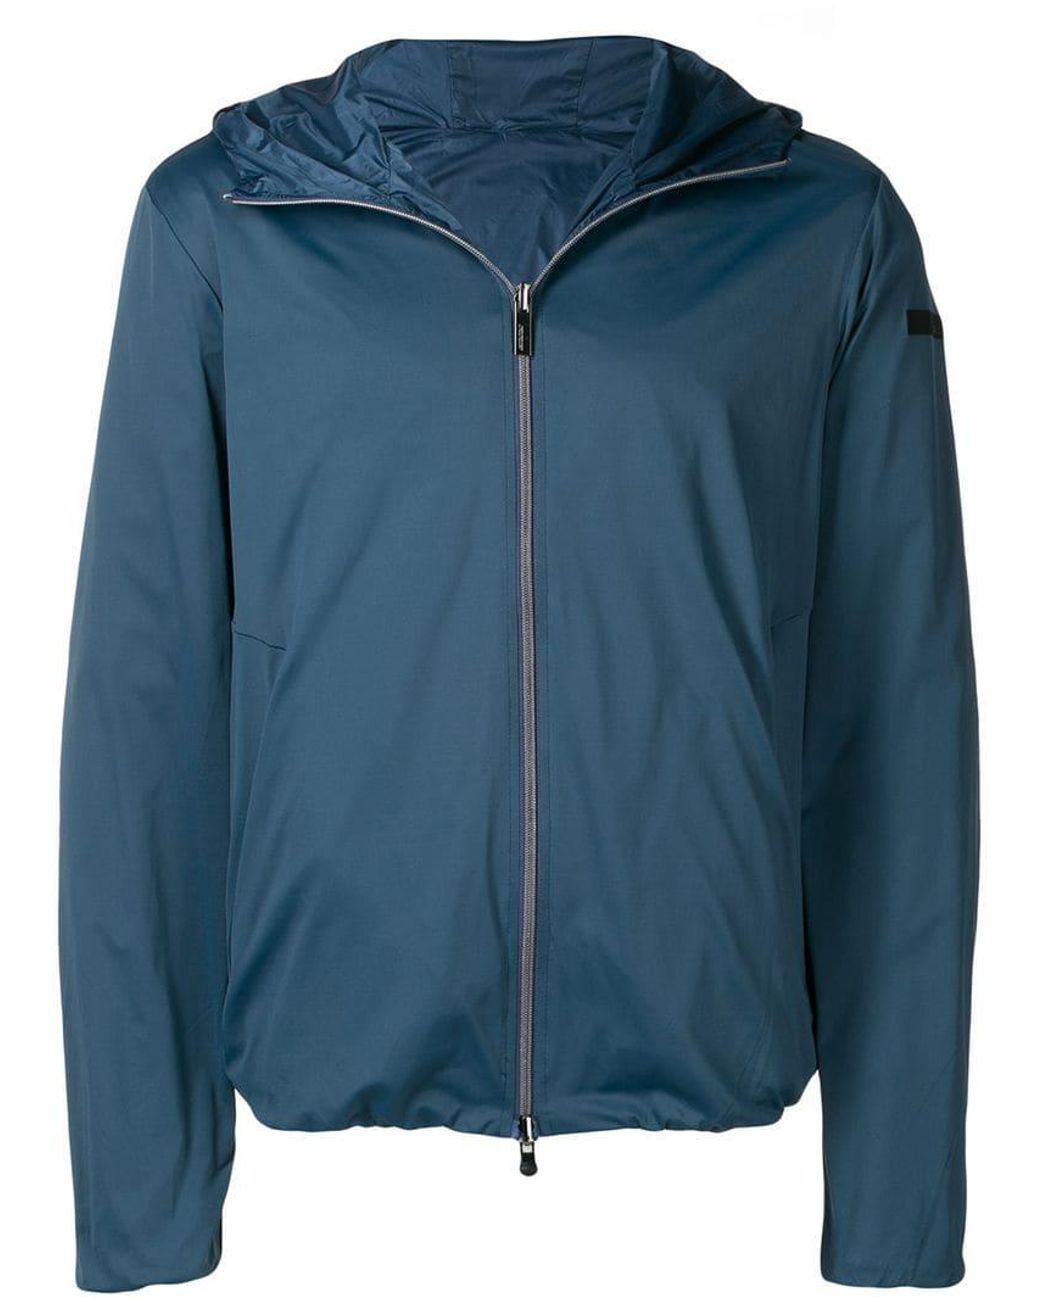 Rrd Hooded Active Jacket in Blue for Men - Lyst